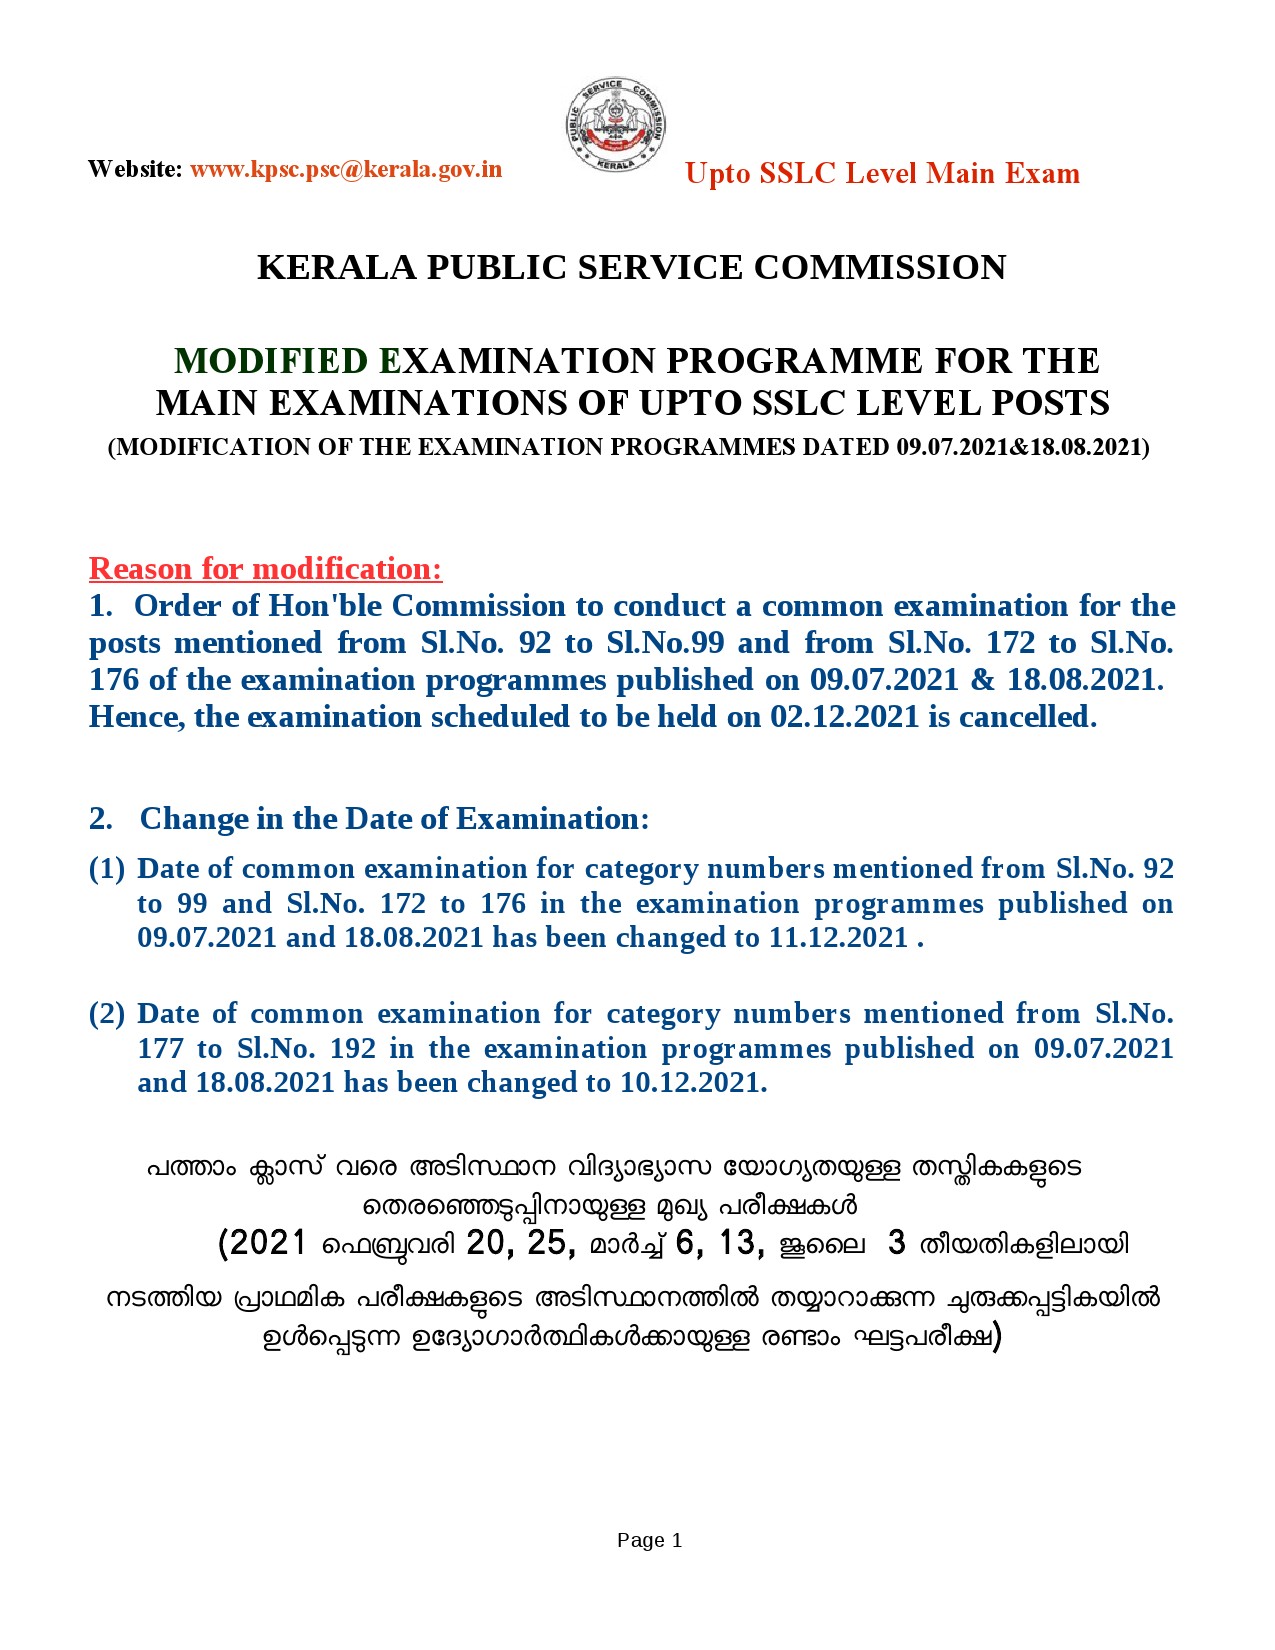 KPSC Programme For Main Examinations Of Upto SSLC Level Posts - Notification Image 1